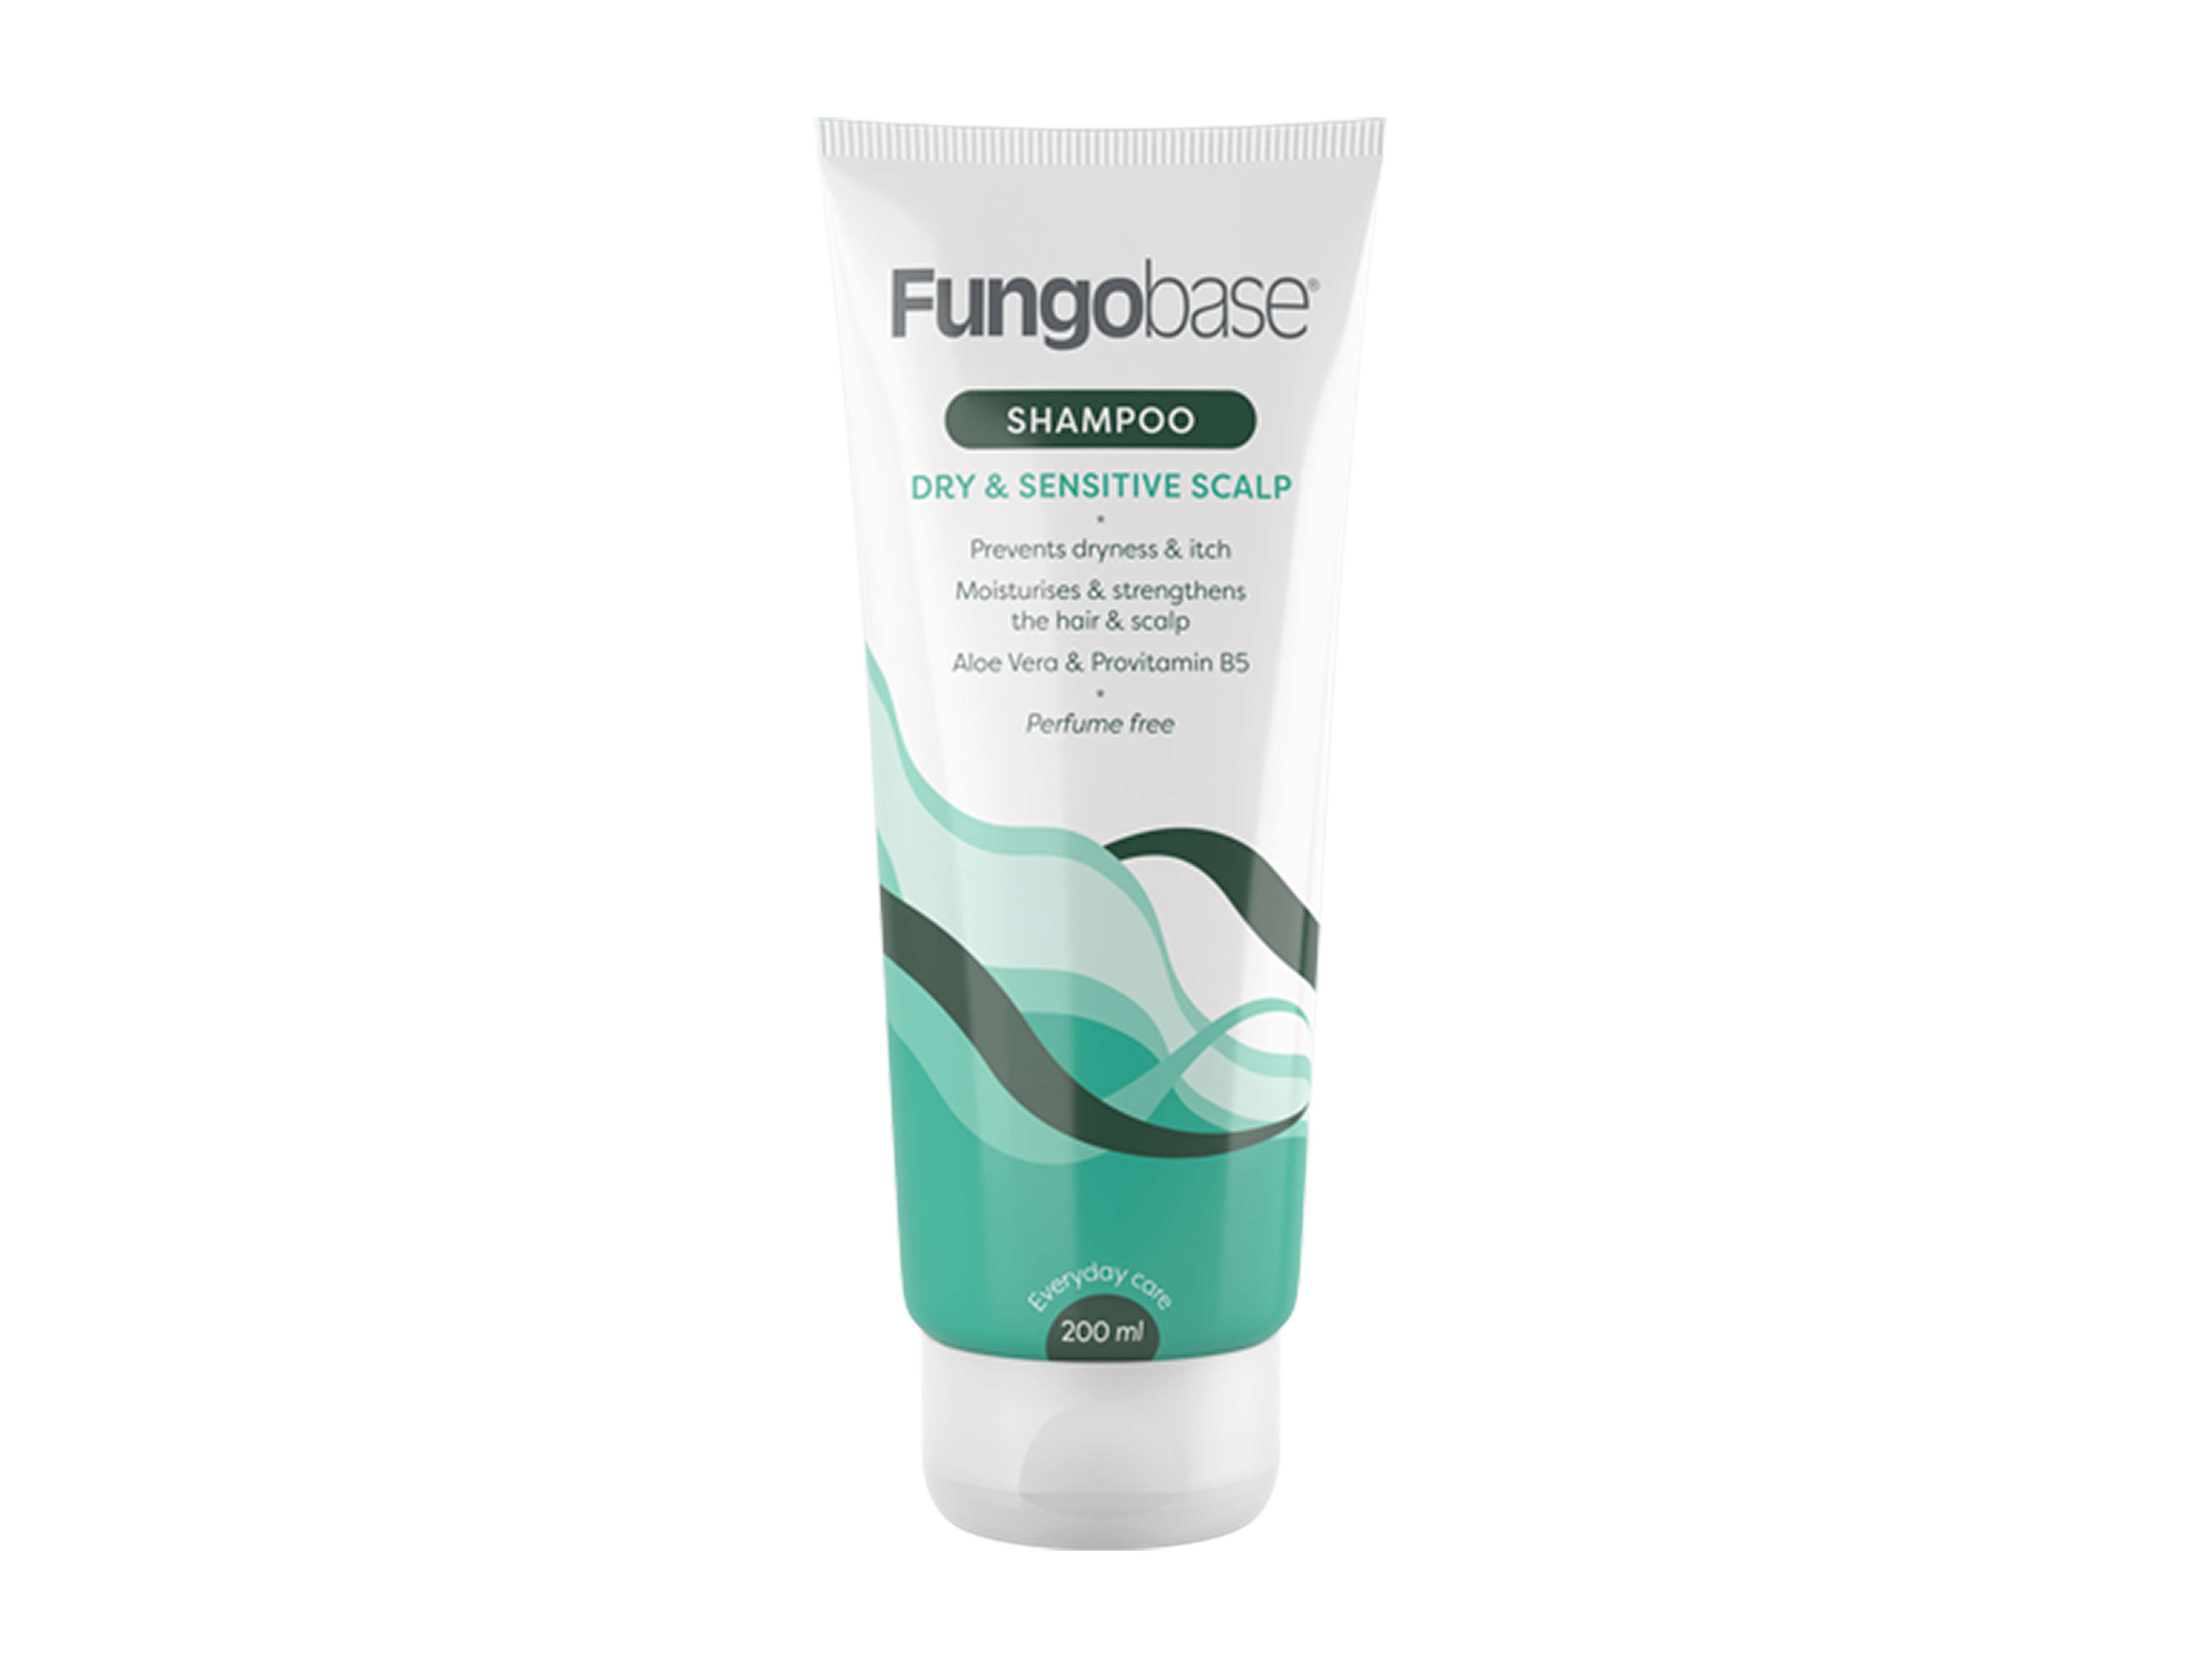 Fungobase Dry & Sensitive Scalp Shampoo, 200 ml